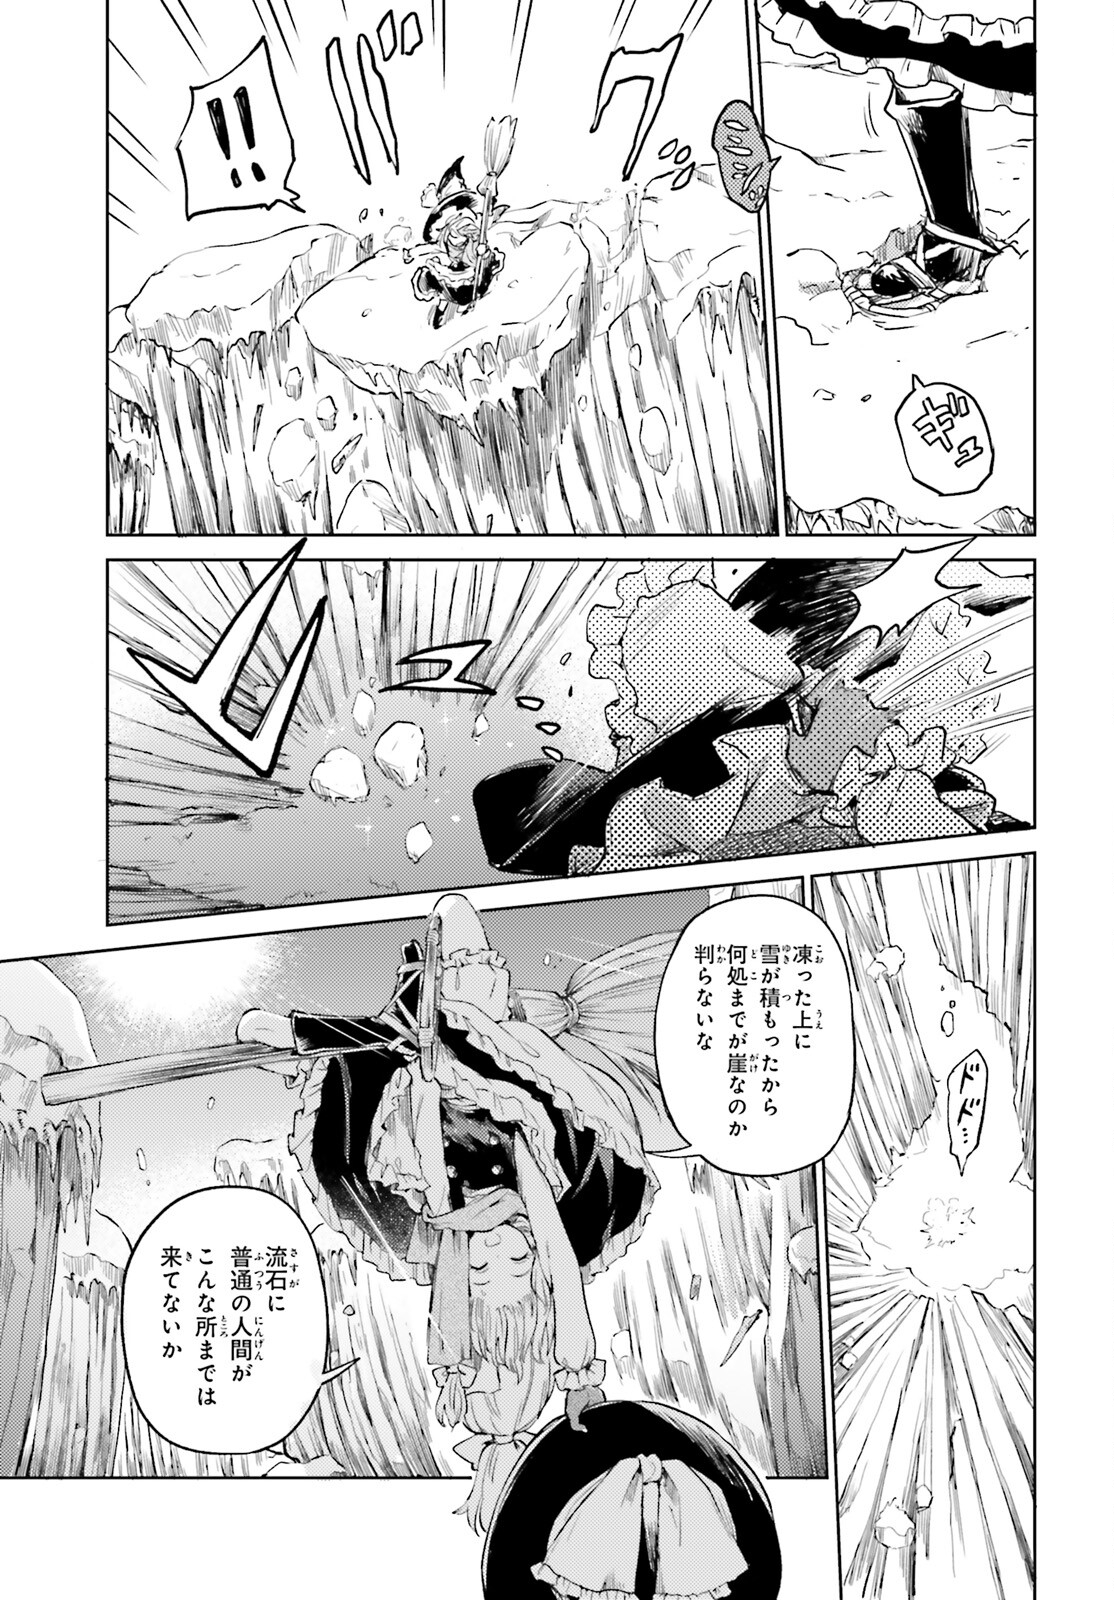 Touhouyoi Chouka Routasuiitaa-tachi no Yoiza - Chapter 47 - Page 3